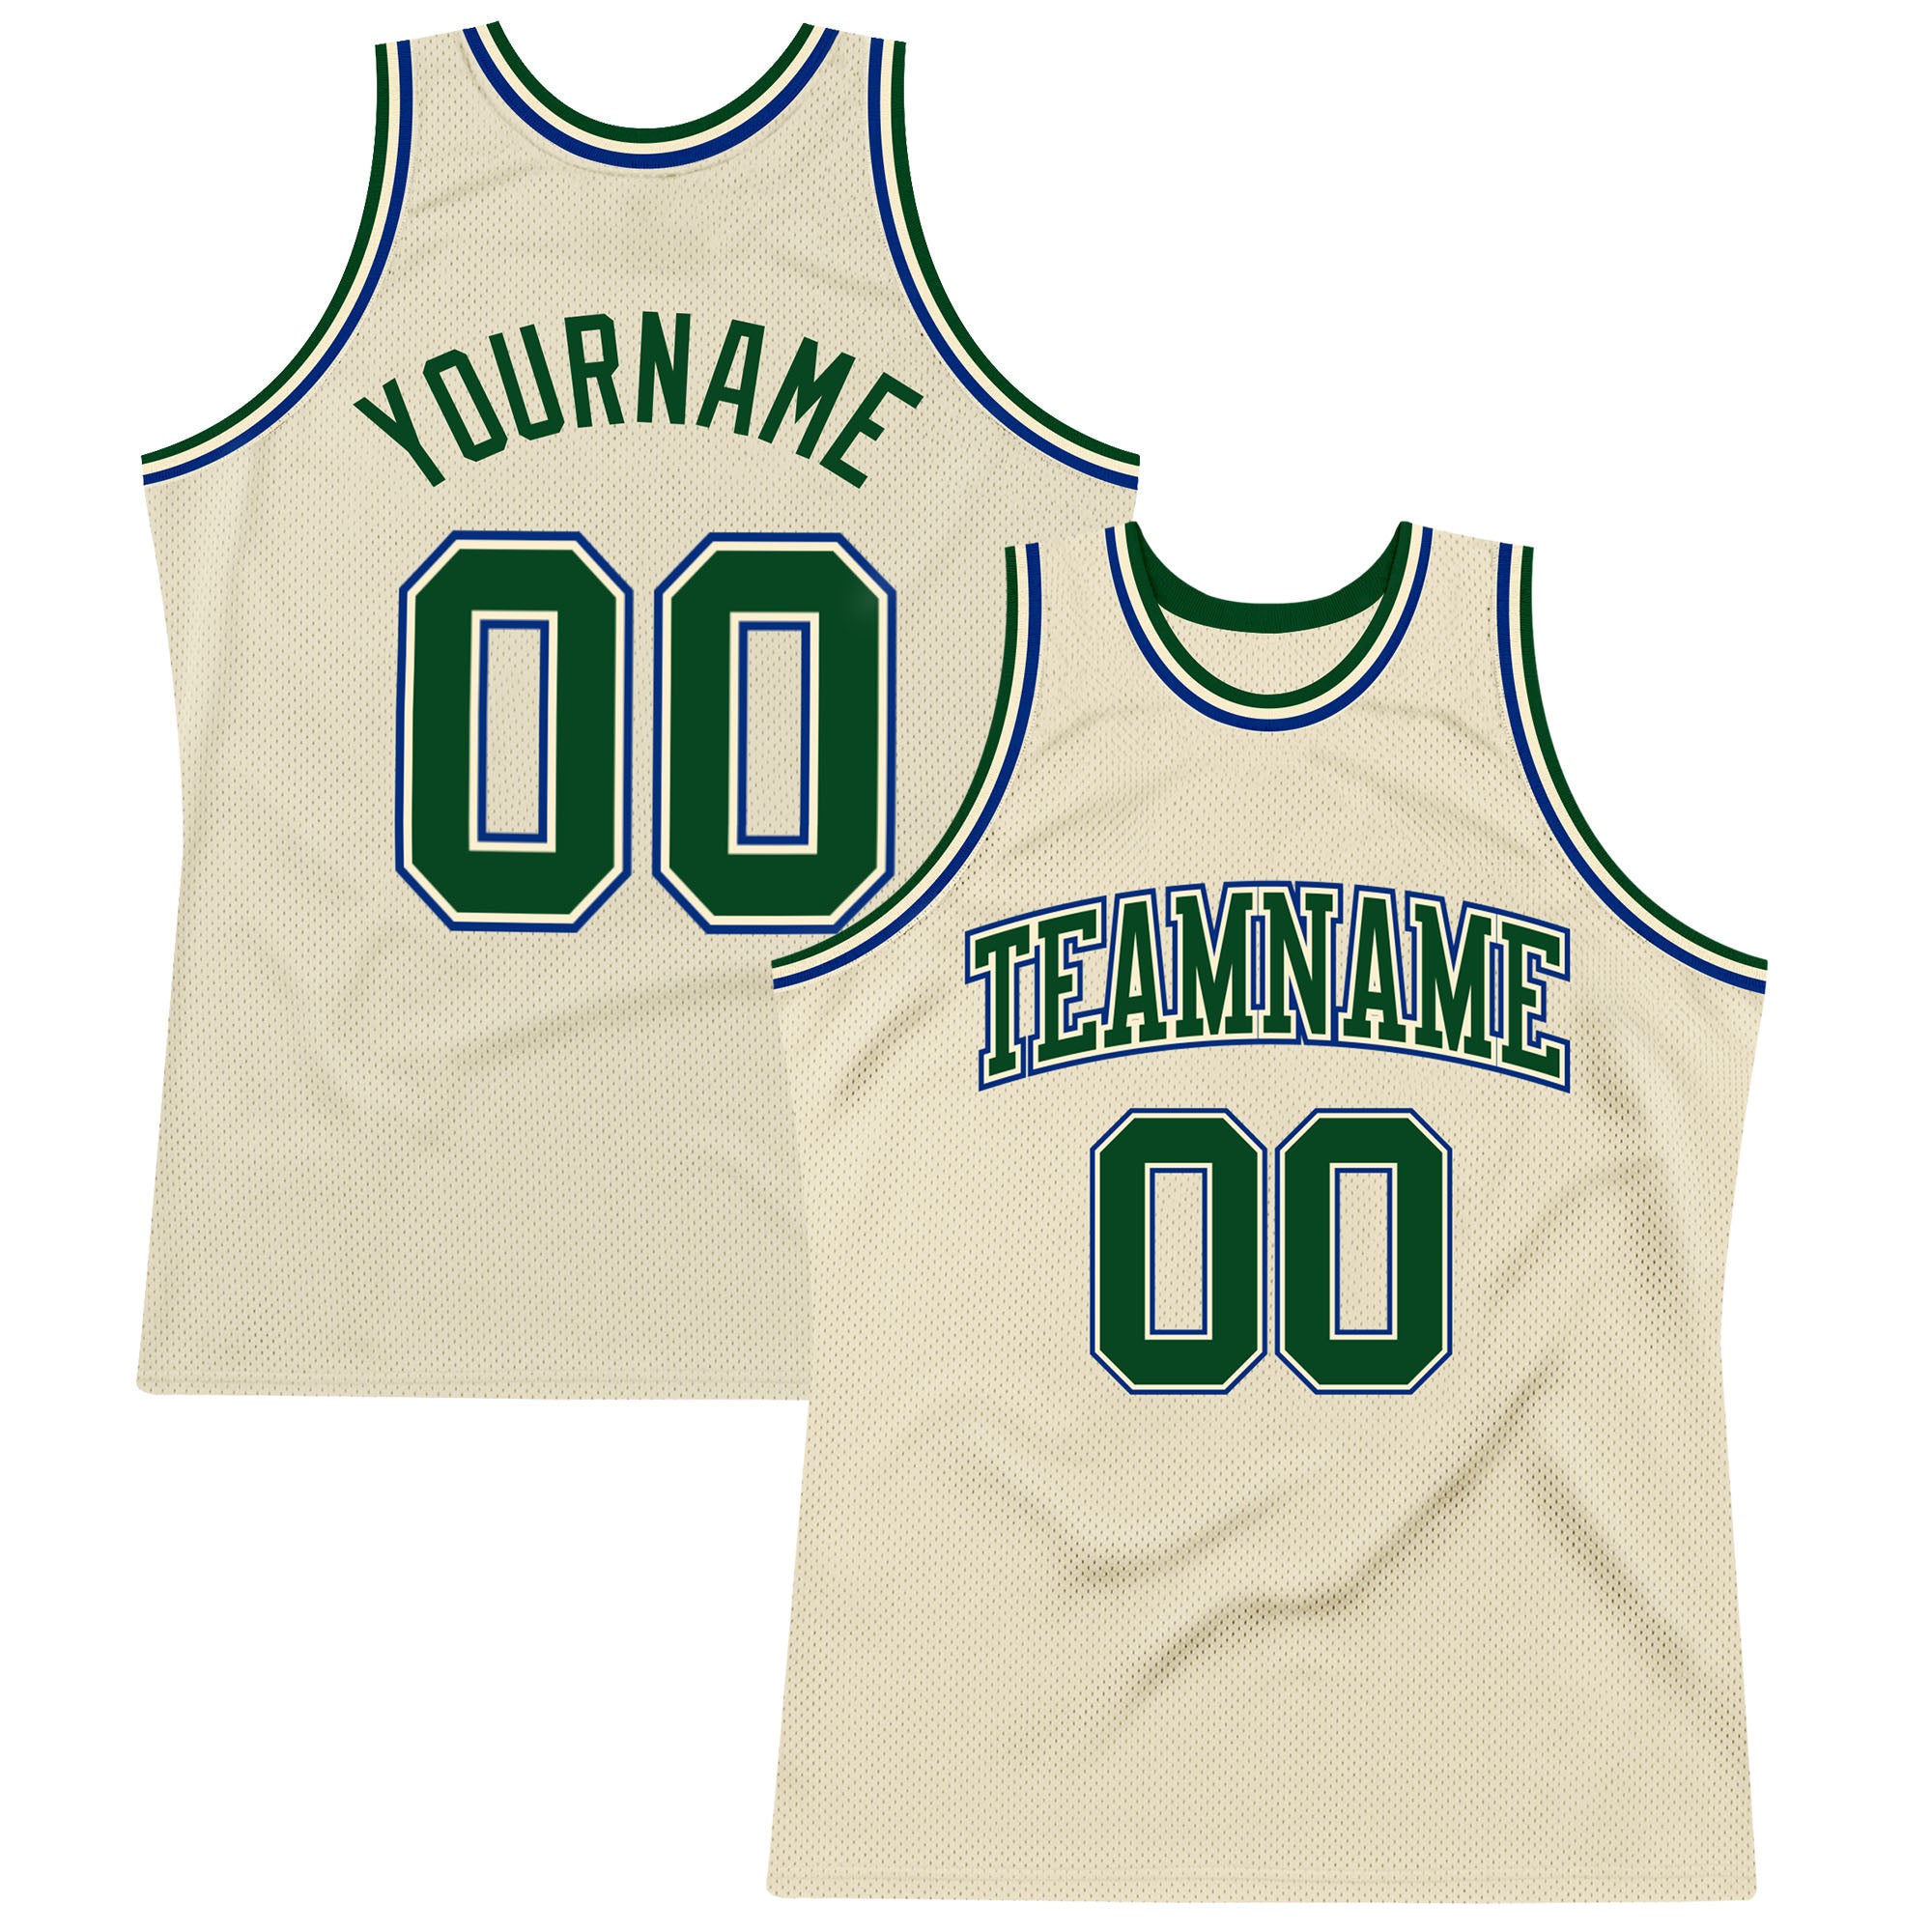 FANSIDEA Custom Cream Green-Royal Authentic Throwback Basketball Jersey Men's Size:3XL